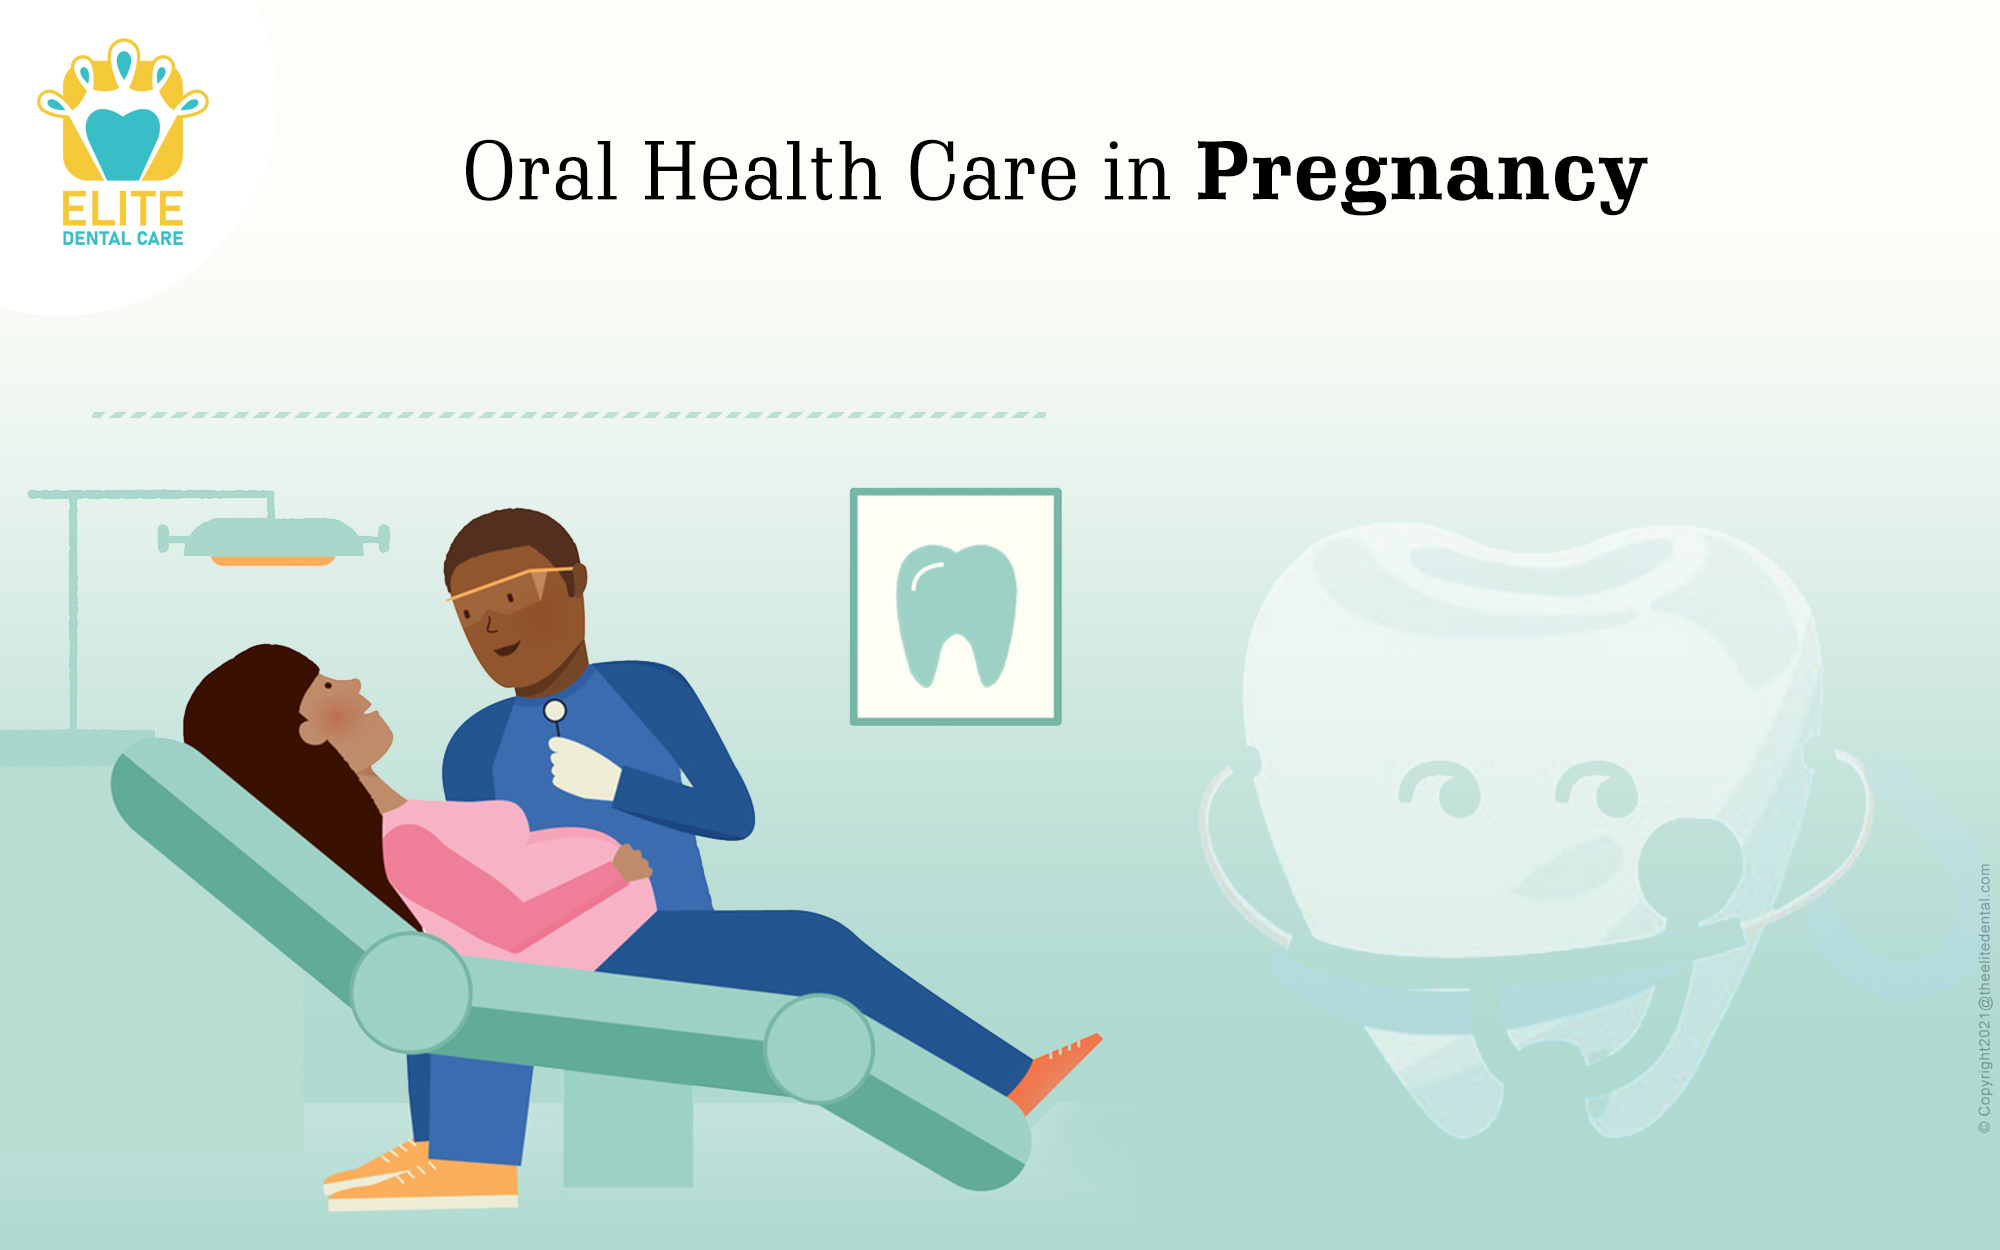 ORAL HEALTH CARE IN PREGNANCY